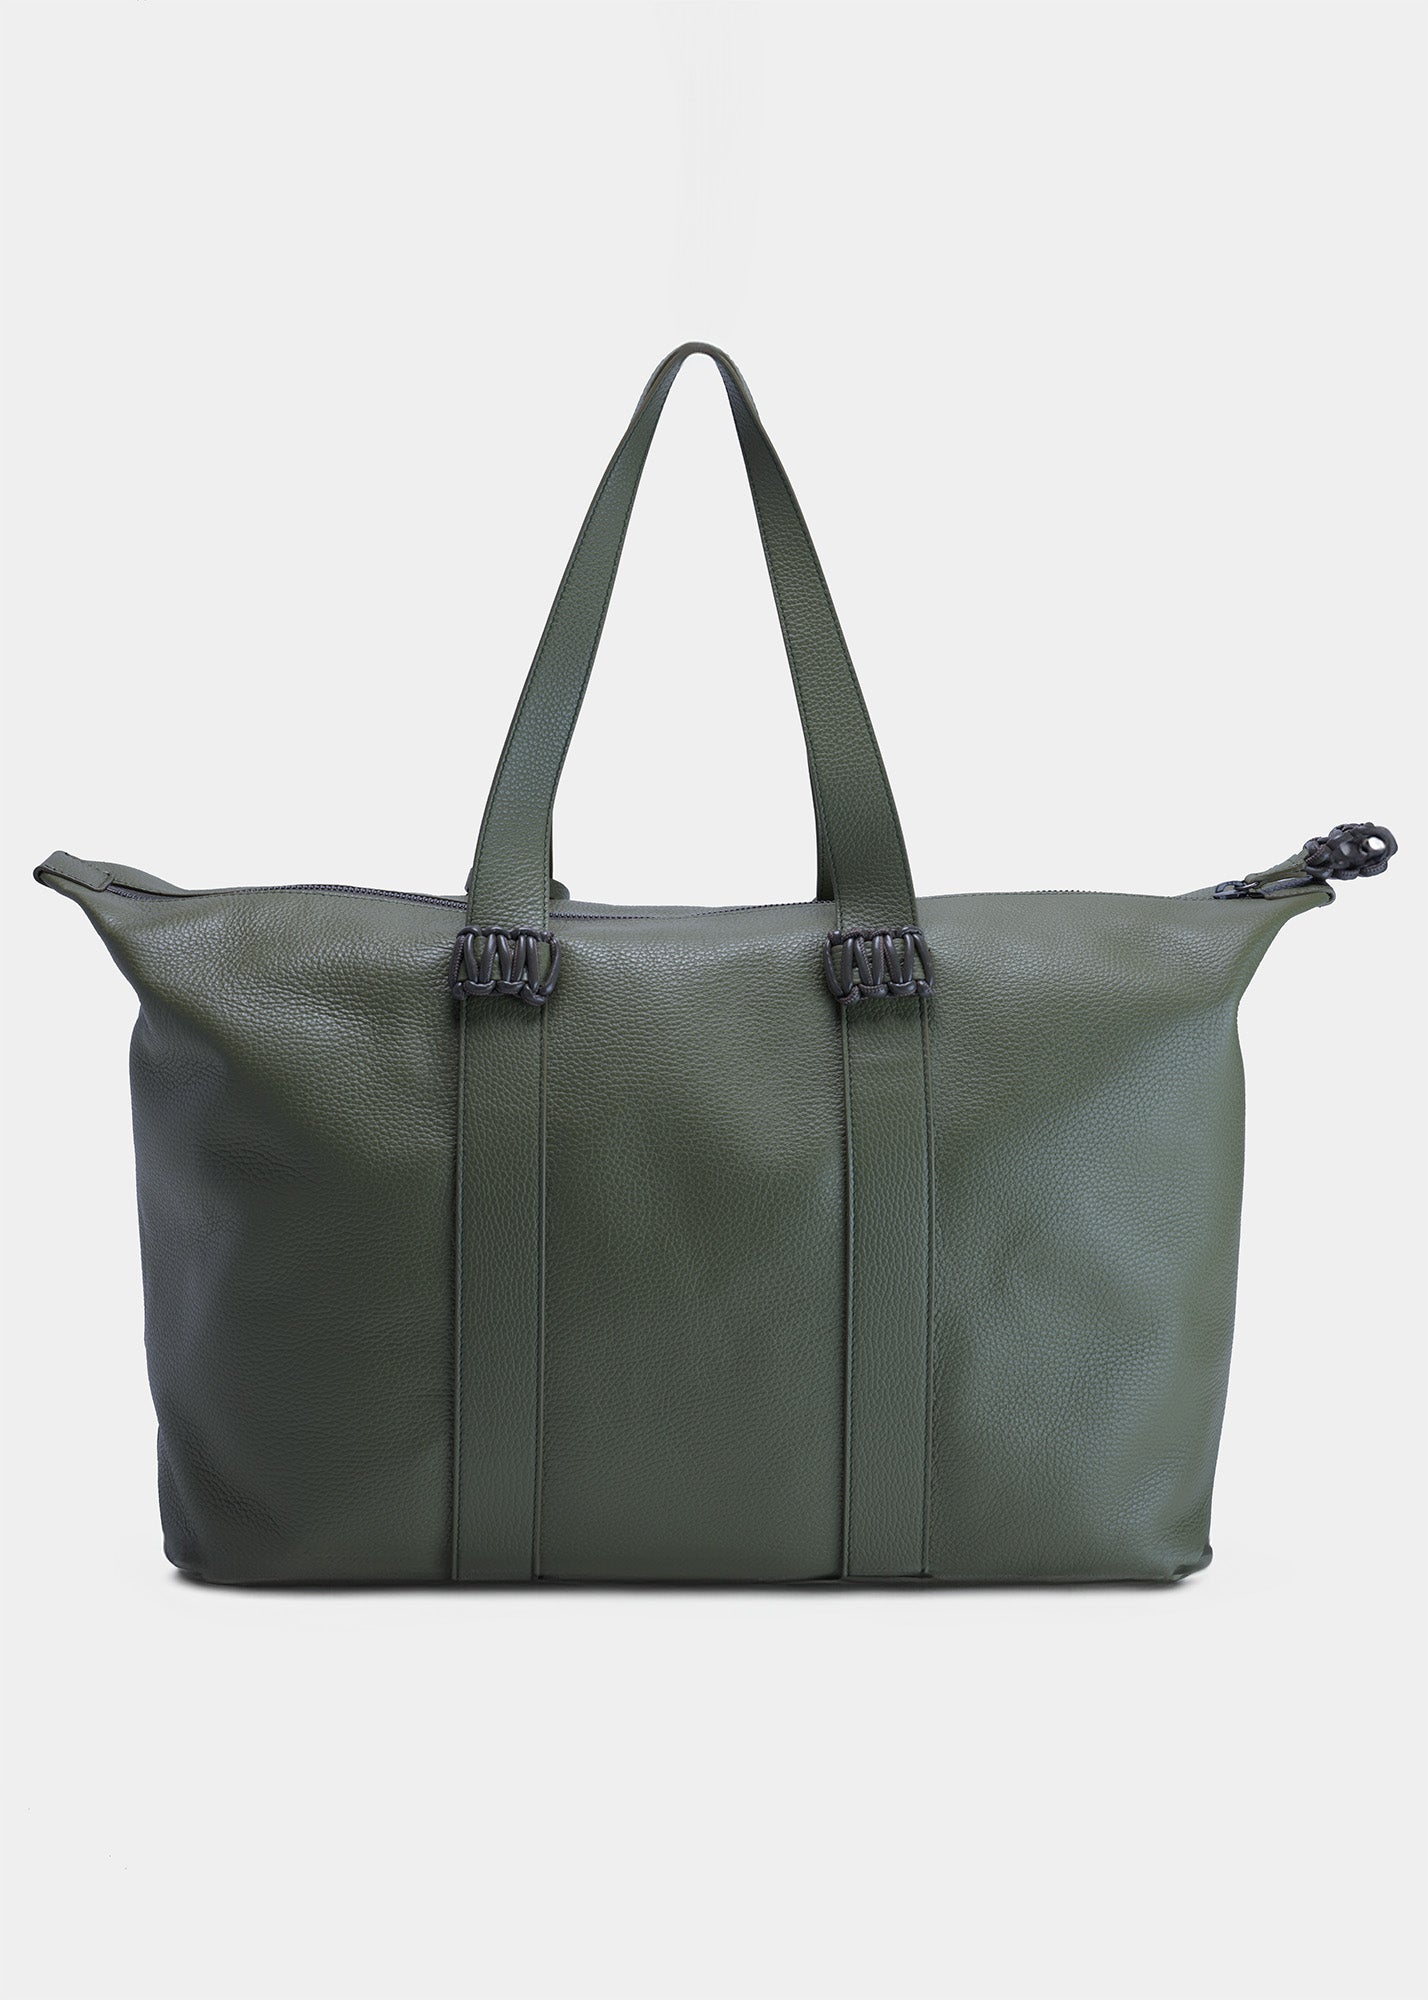 Savant Olive-Green Nylon/Leather Duffle Bag, Medium